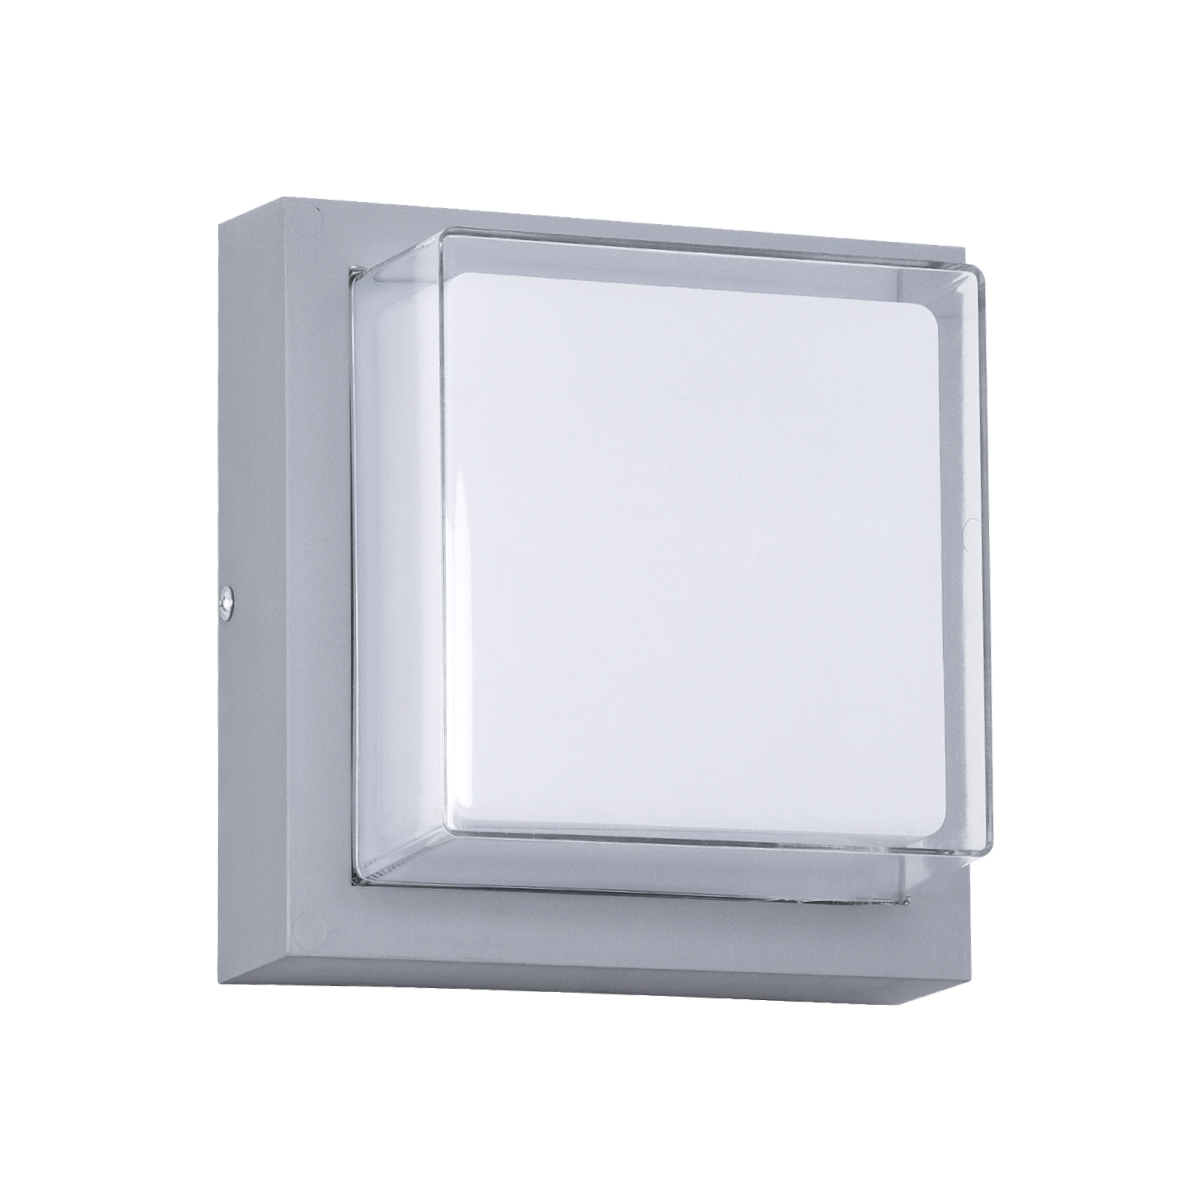 GLOBOSTAR® NEXUS 60768 Φωτιστικό Τοίχου – Απλίκα Αρχιτεκτονικού Φωτισμού Εσωτερικού/Εξωτερικού Χώρου Up or Down LED 10W 1050lm 120° AC175-265V Αδιάβροχο IP65 – Πλαστικό Σώμα – Φυσικό λευκό 4500K – Μ17 x Π17 x Υ9cm – Γκρι – Bridgelux Chip – 3 Χρόνια Εγγύηση